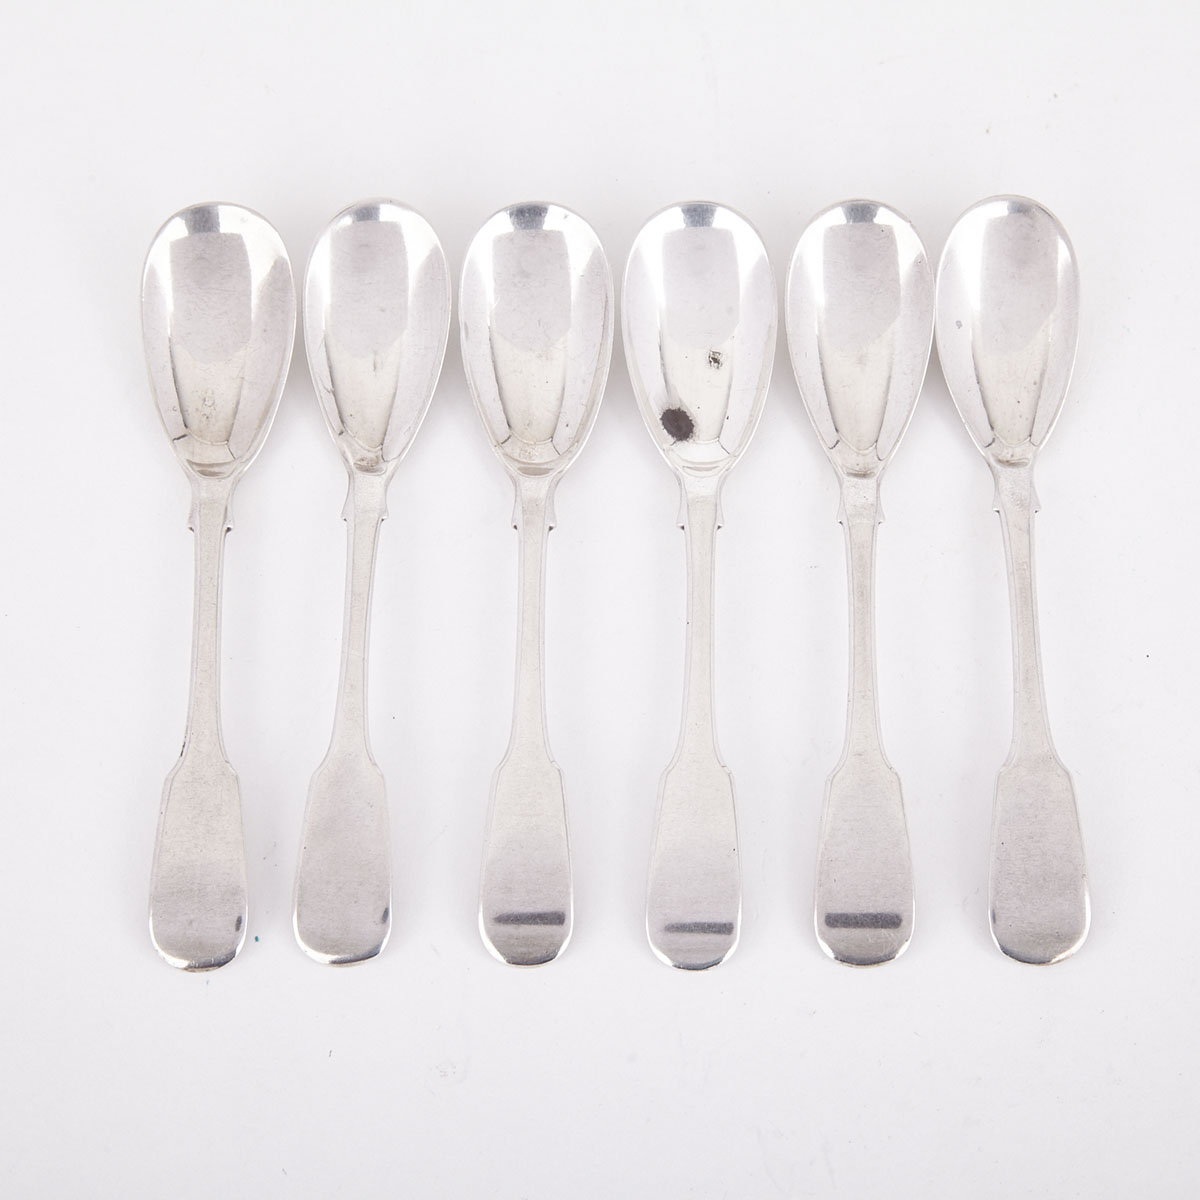 Six Canadian Silver Fiddle Pattern Egg Spoons, Laurent Amiot, Quebec City, Que., c.1830